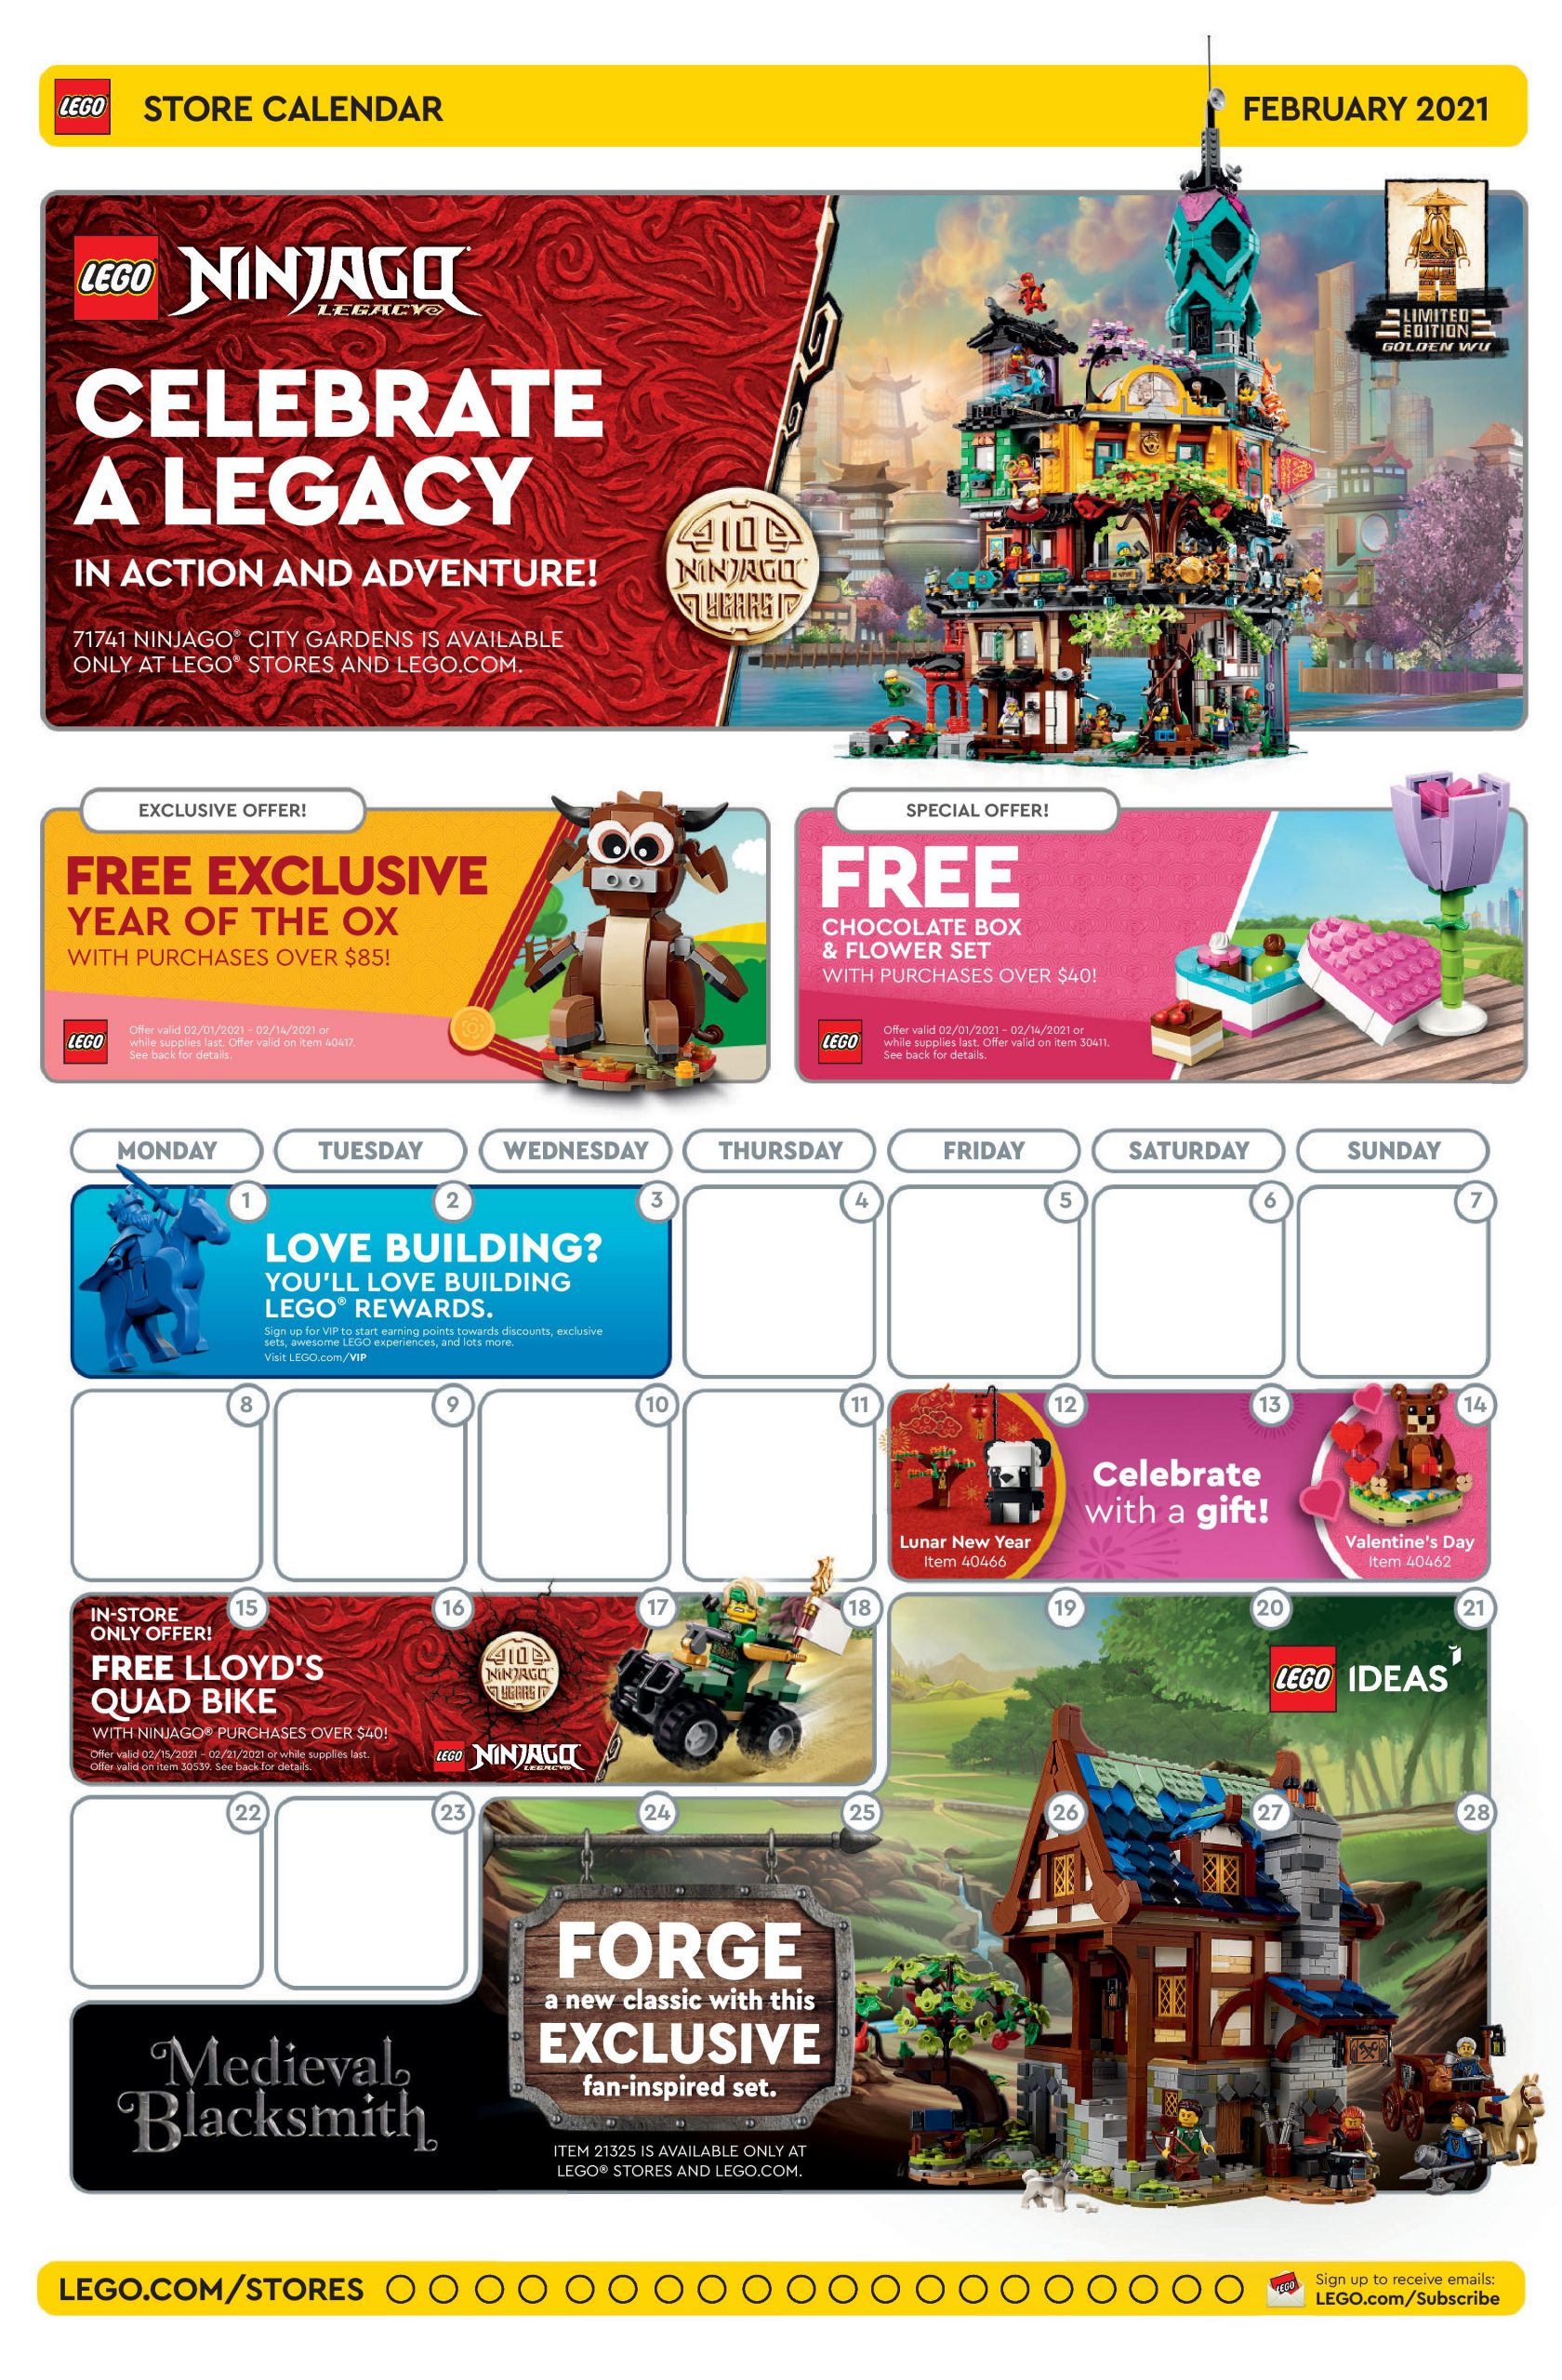 Lego Calendar May 2022 Lego February 2021 Store Calendar Promotions & Events - The Brick Fan